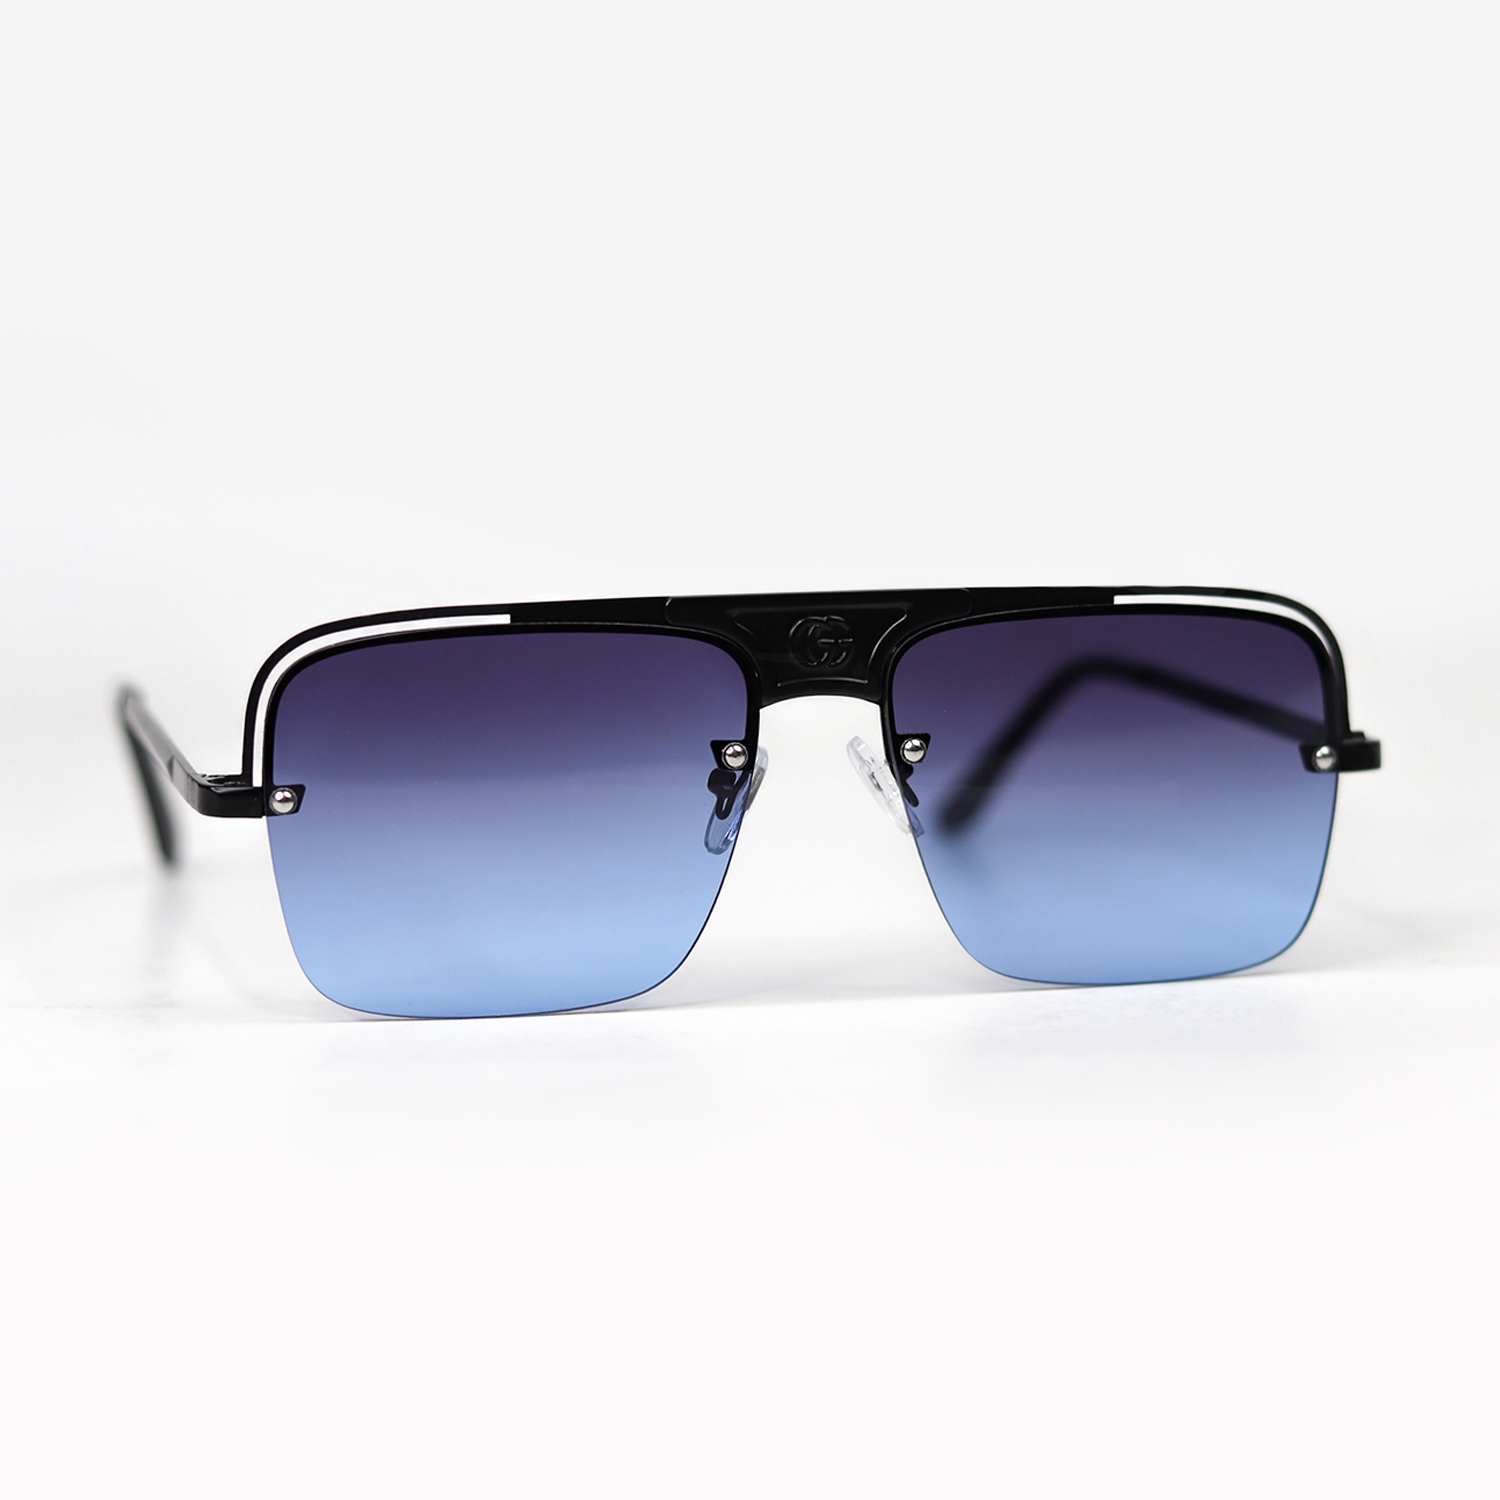 Metal Frame Gradient Shade Sunglasses for Men